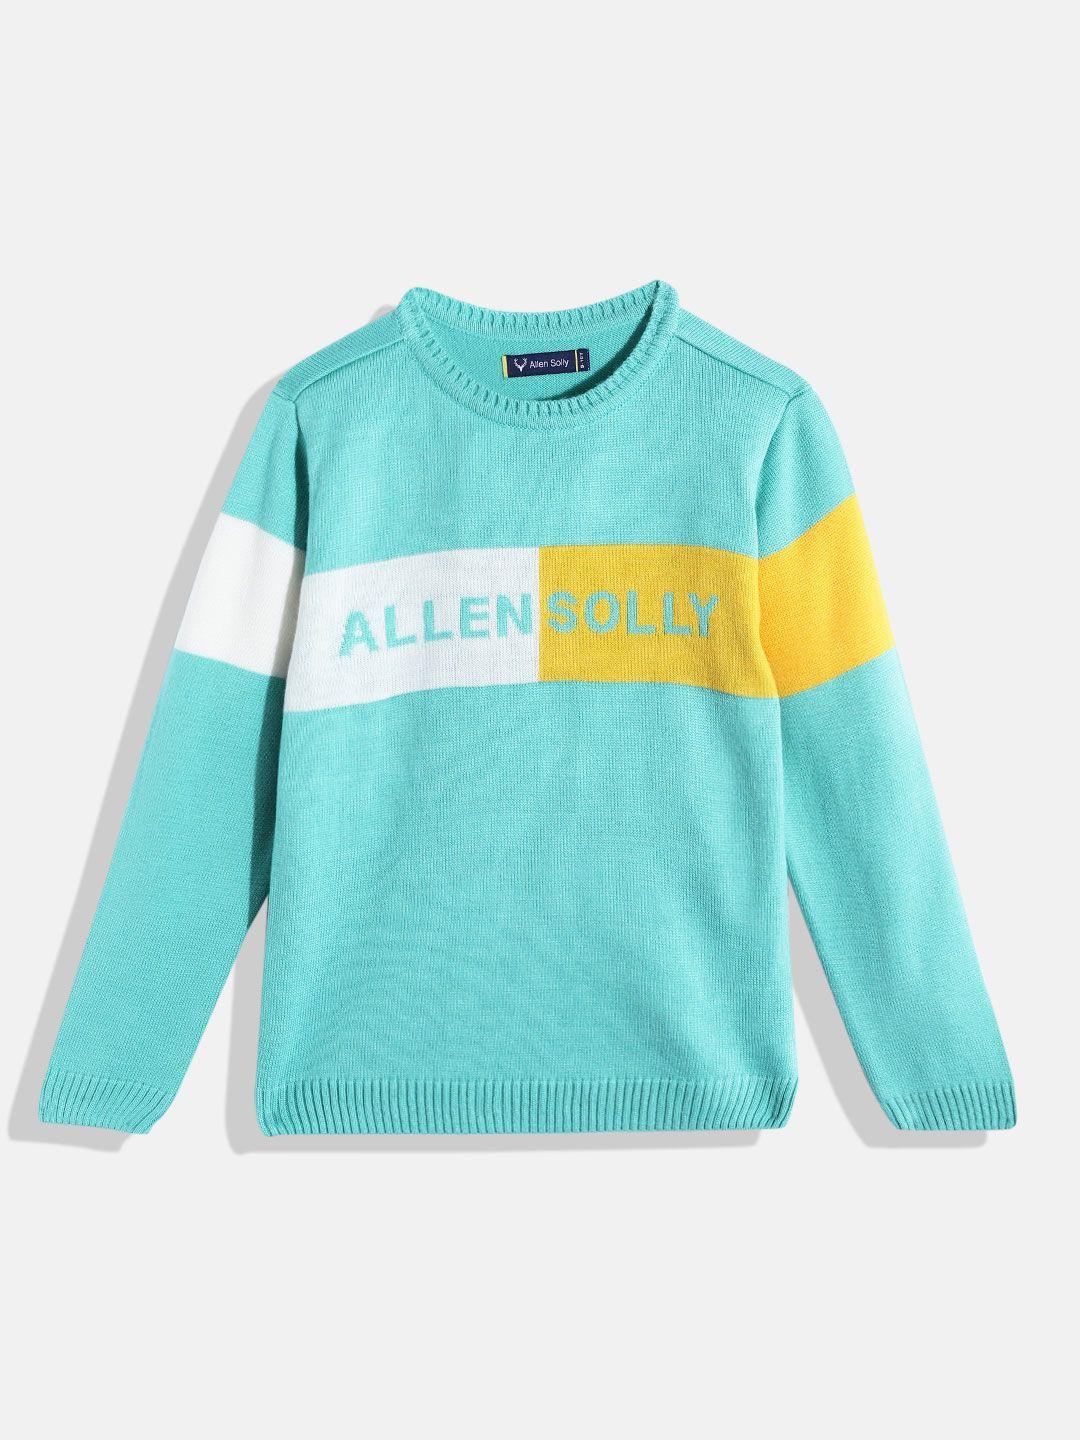 allen-solly-junior-boys-turquoise-blue-&-yellow-self-design-acrylic-pullover